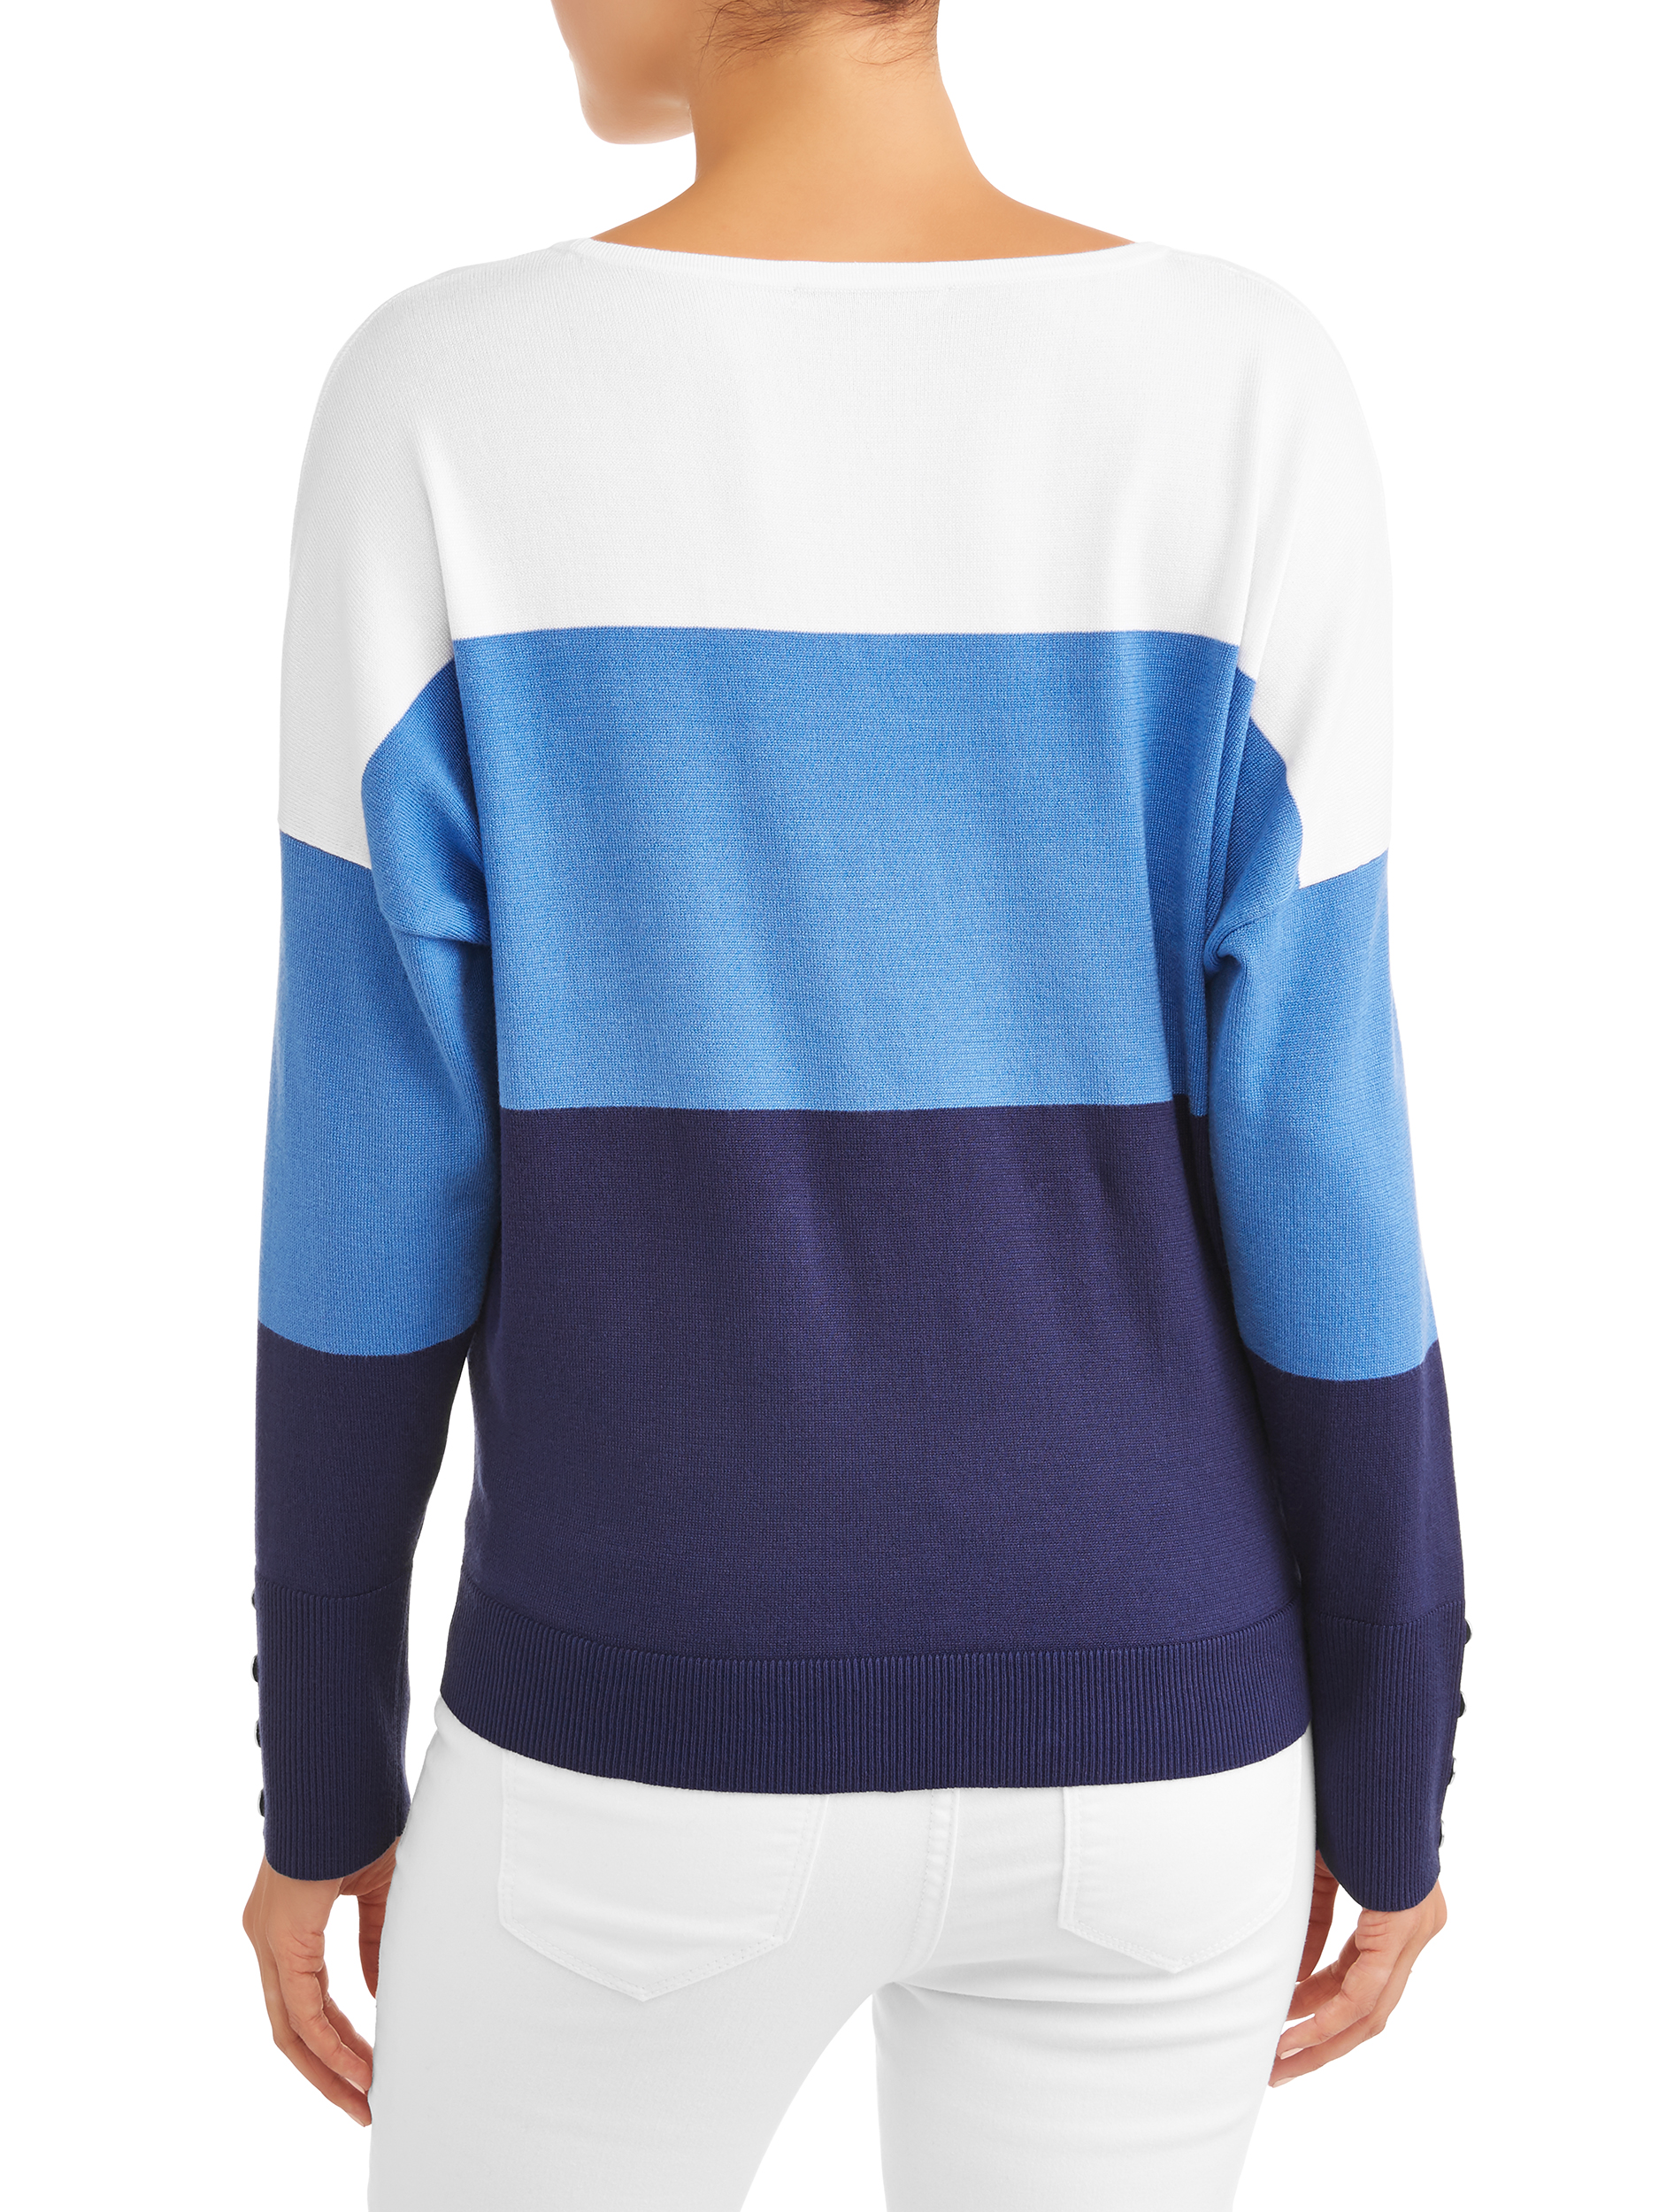 Women's Colorblock Dolman Sleeve Sweater - image 2 of 4